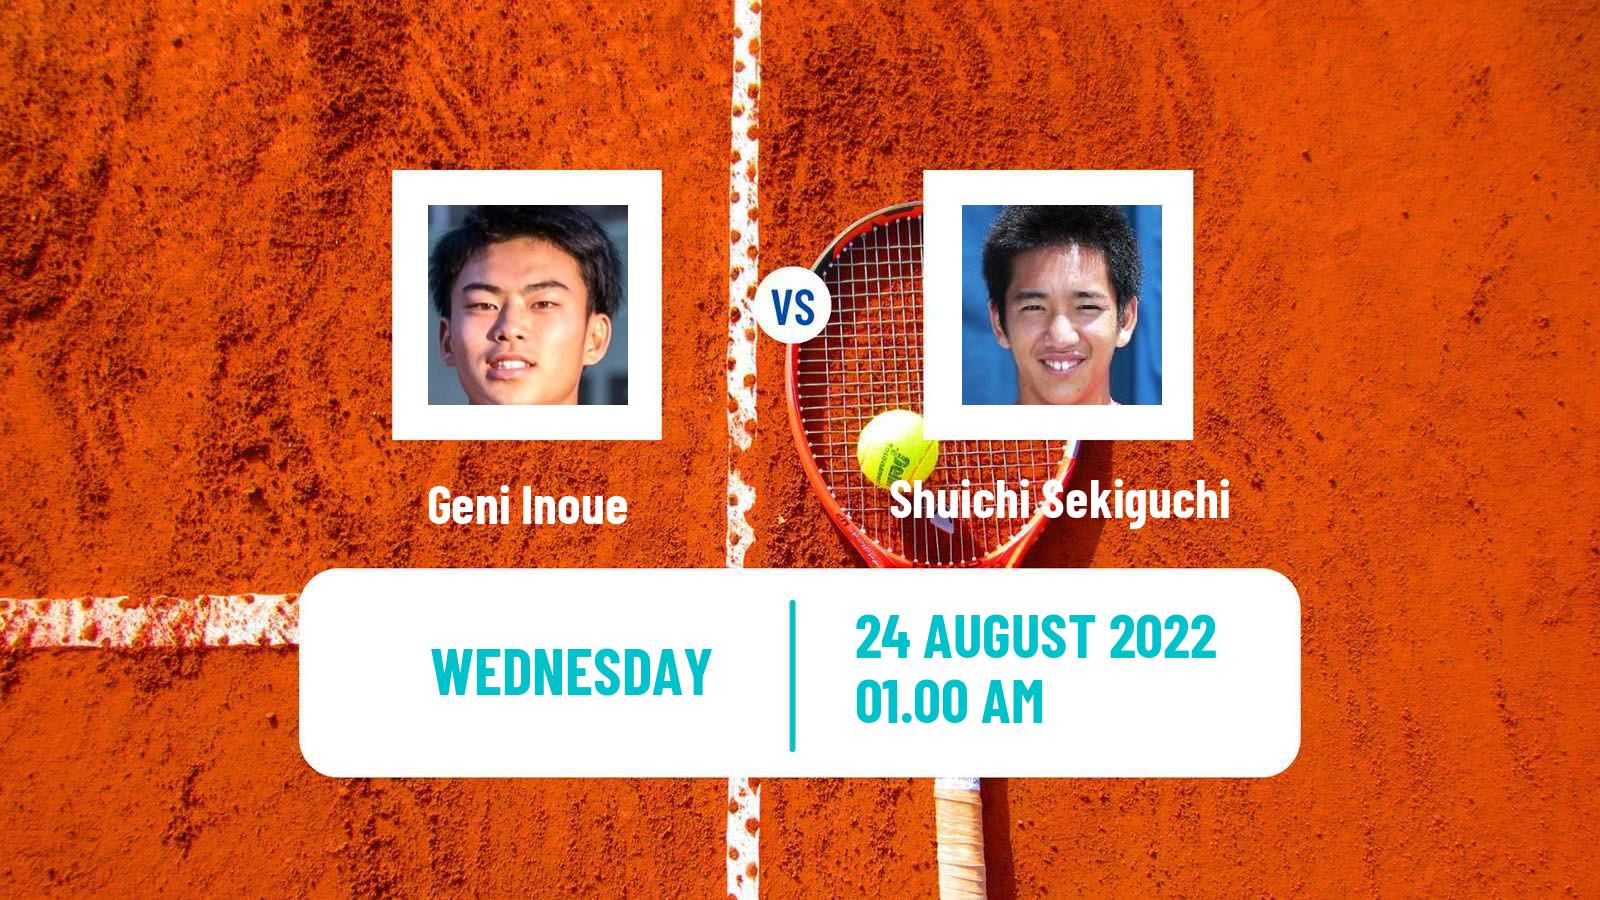 Tennis ITF Tournaments Geni Inoue - Shuichi Sekiguchi